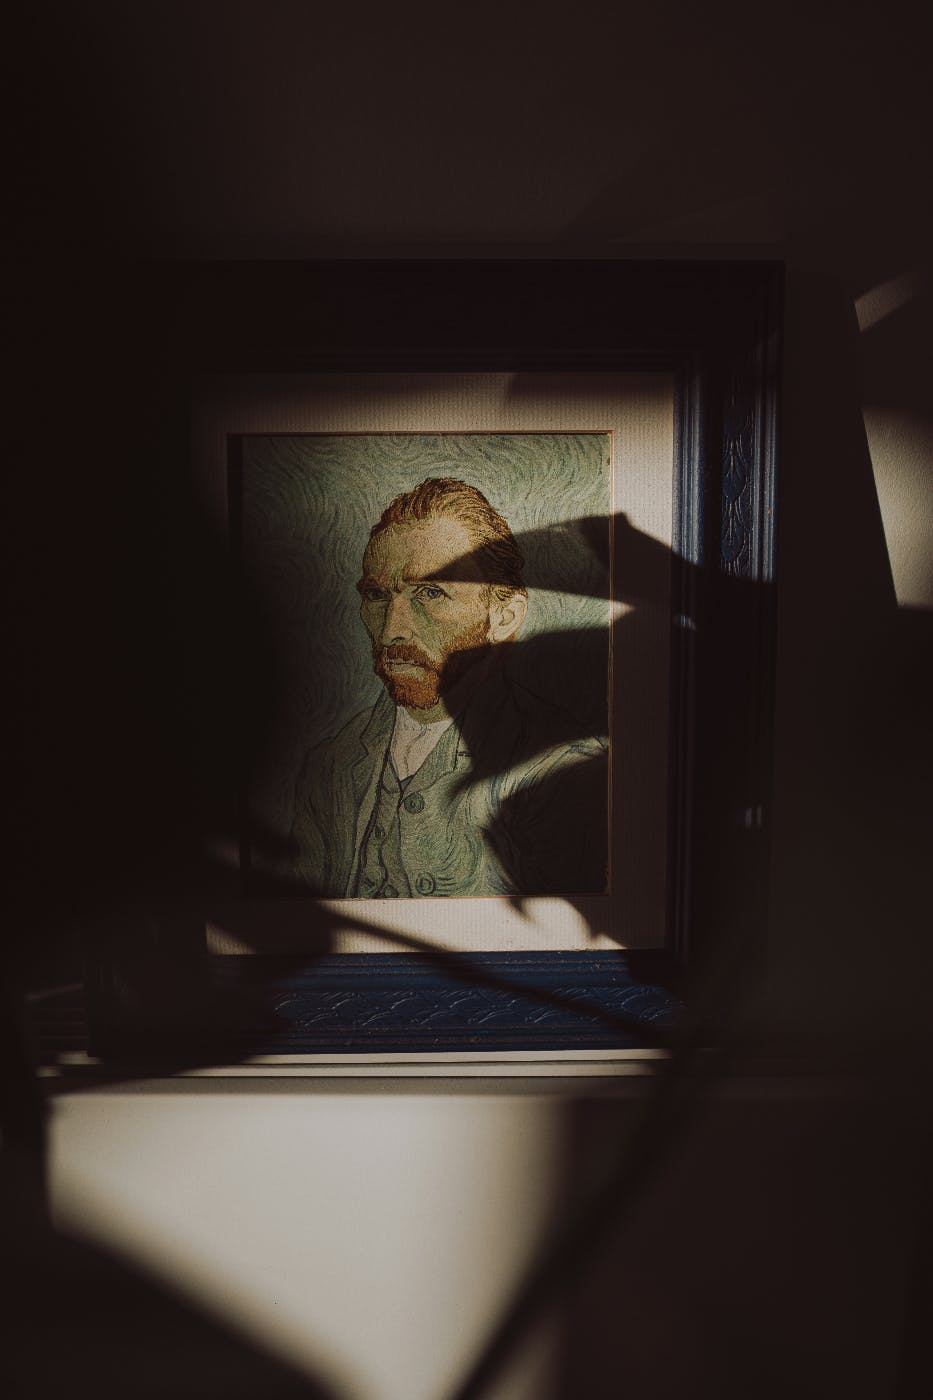 A self portrait of Van Gogh in heavy shadows